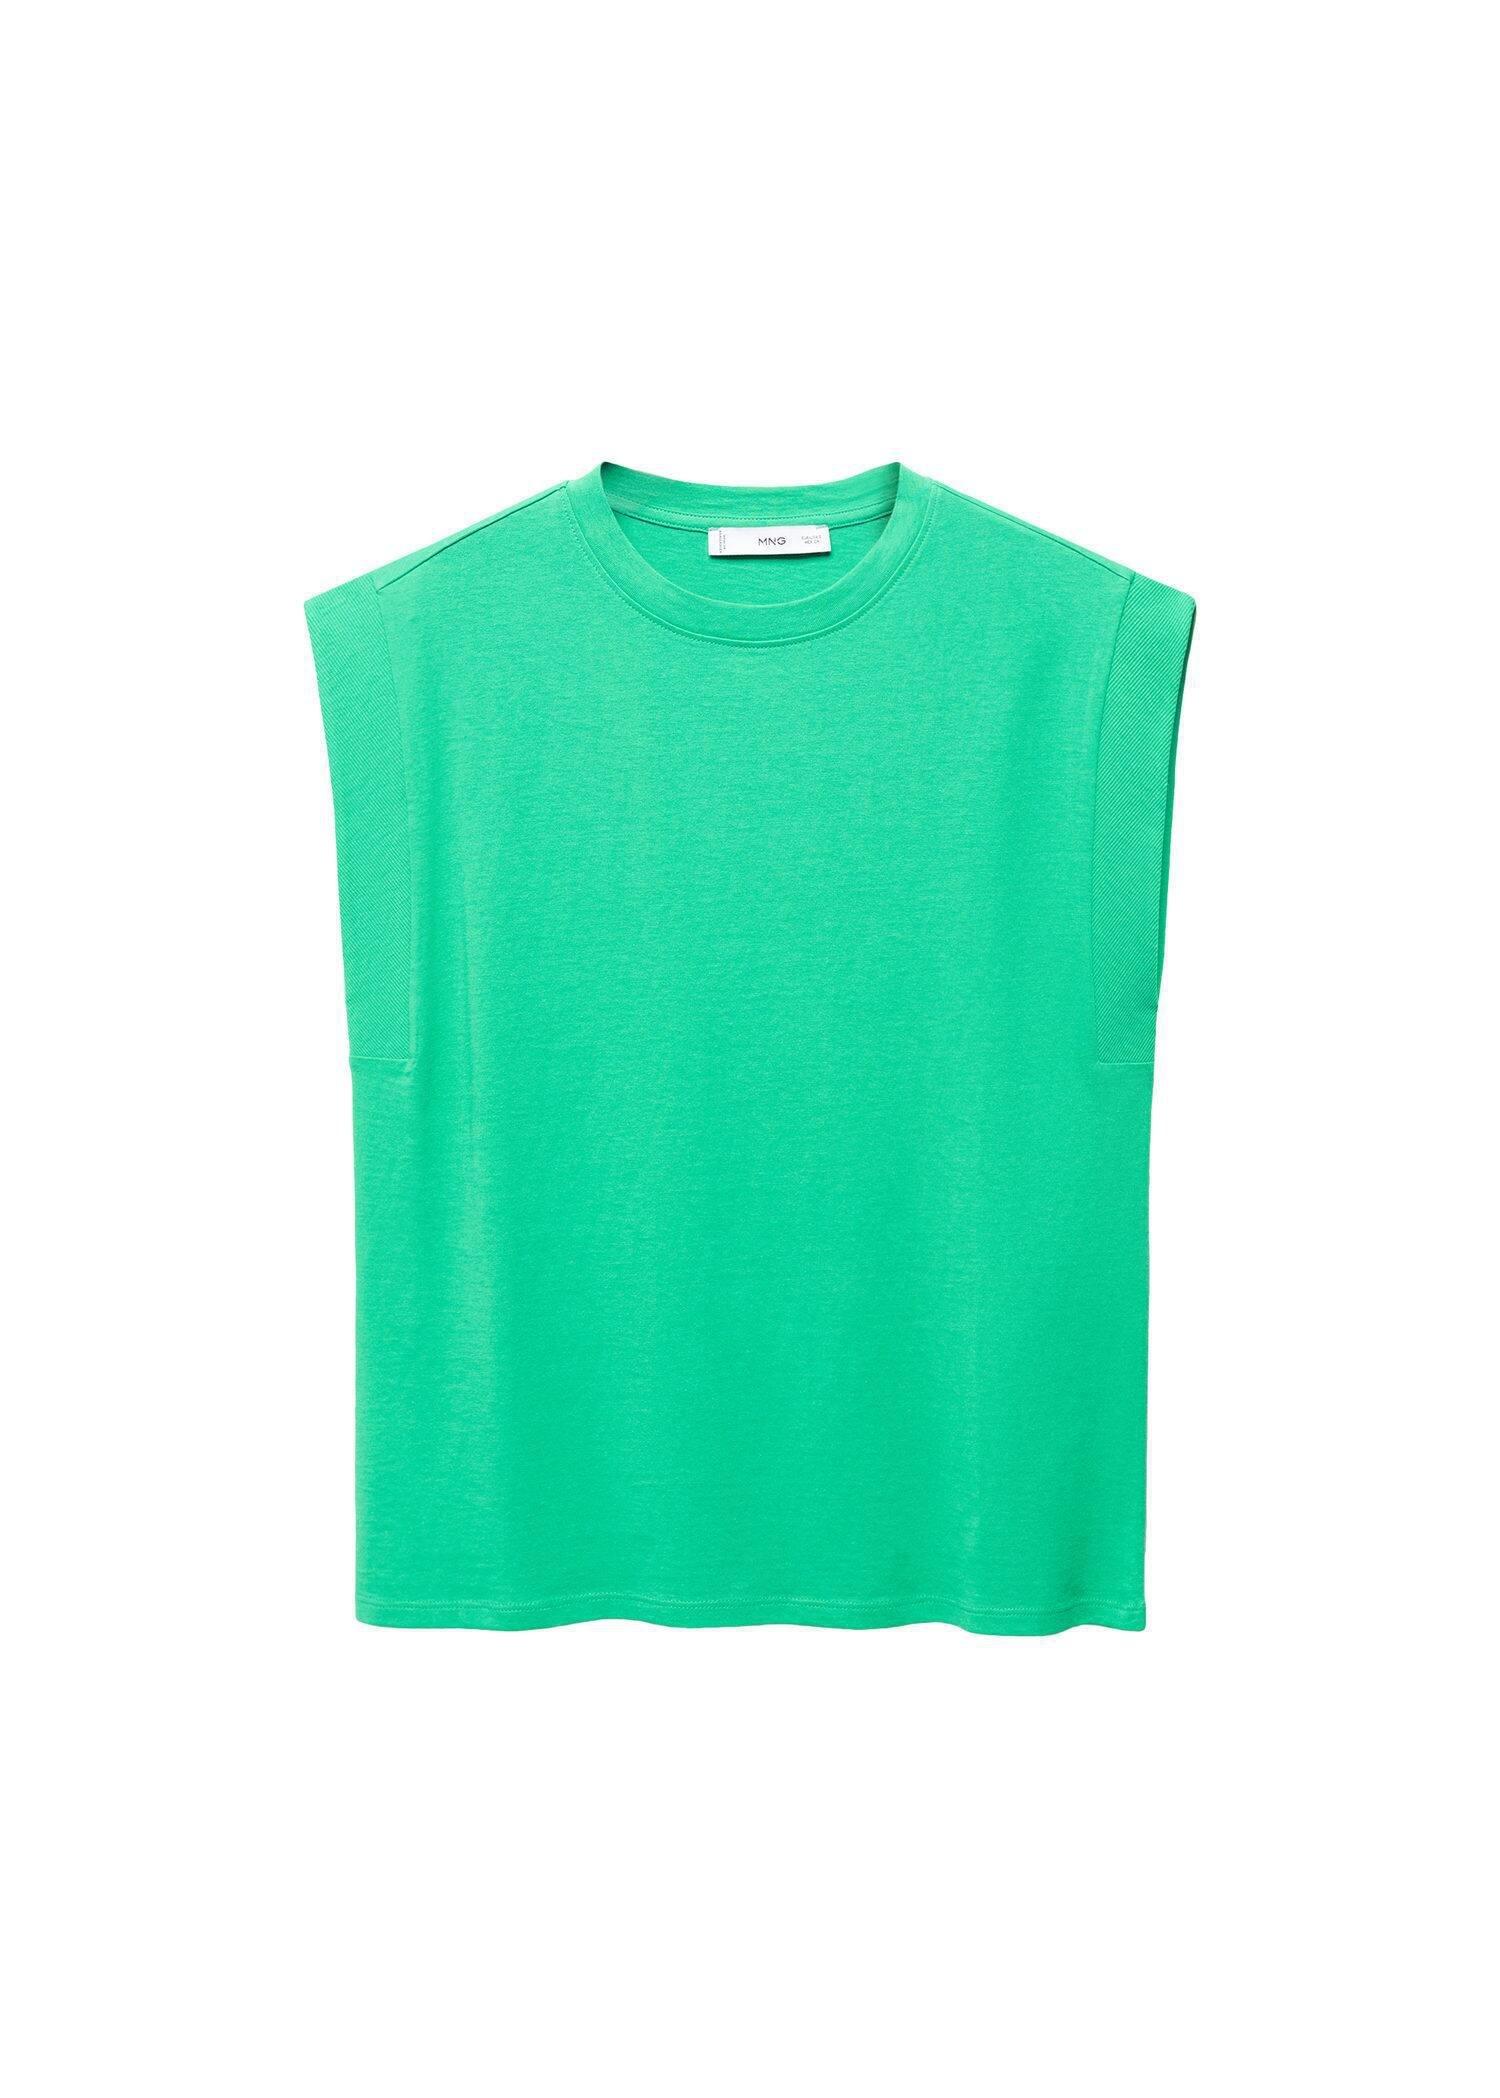 Mango - Green Rounded Neck Cotton T-Shirt